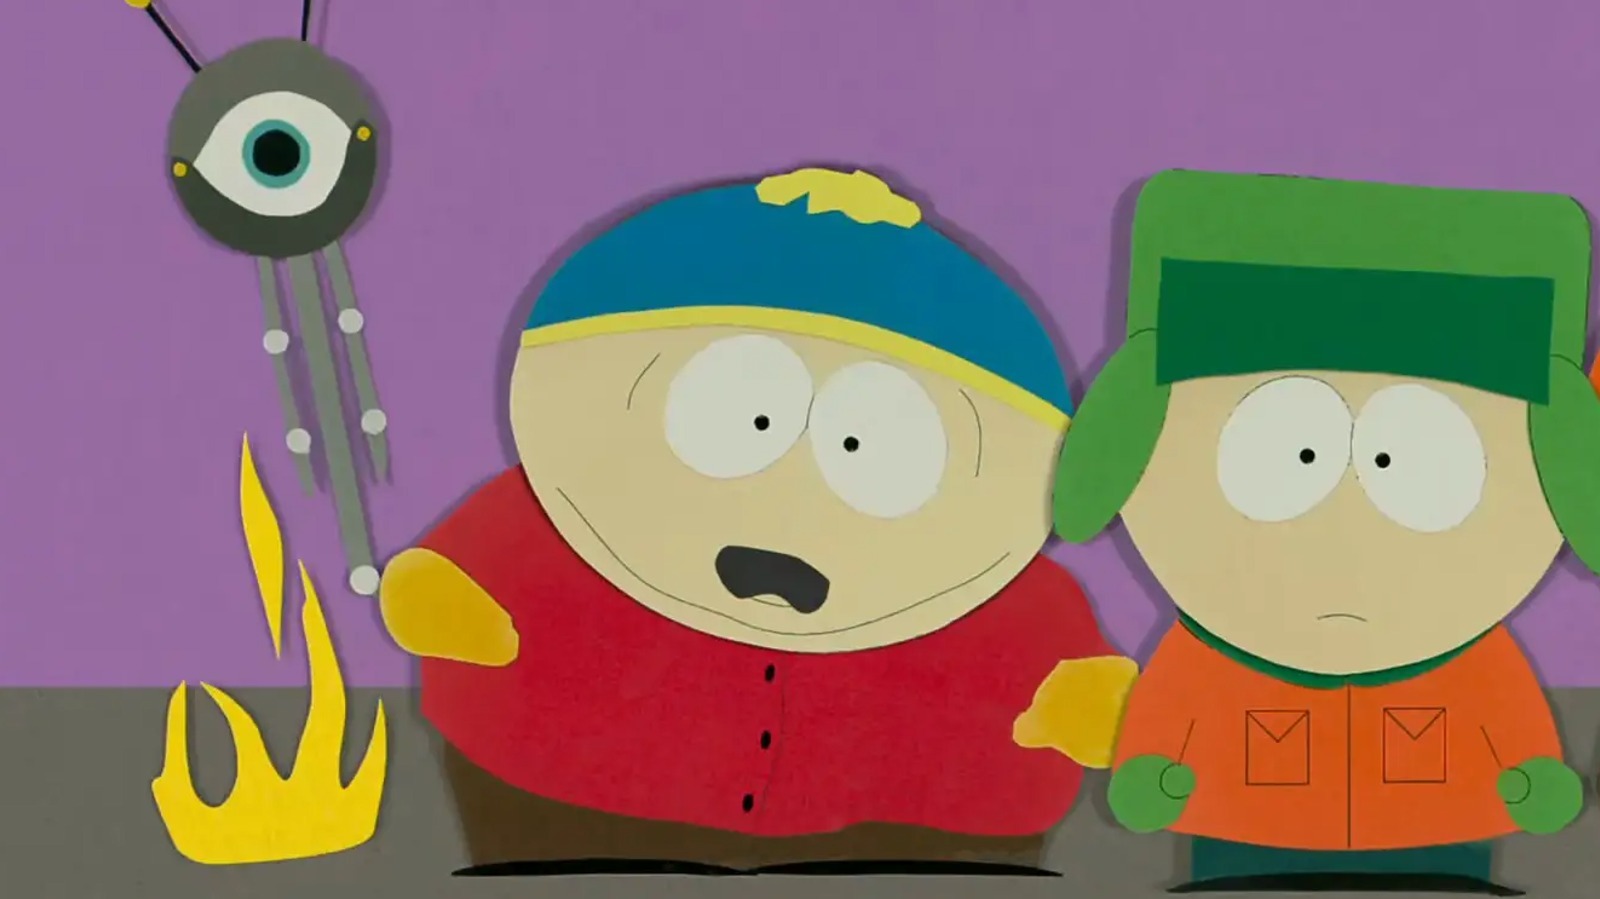 South Park - Satirical Animated TV Show